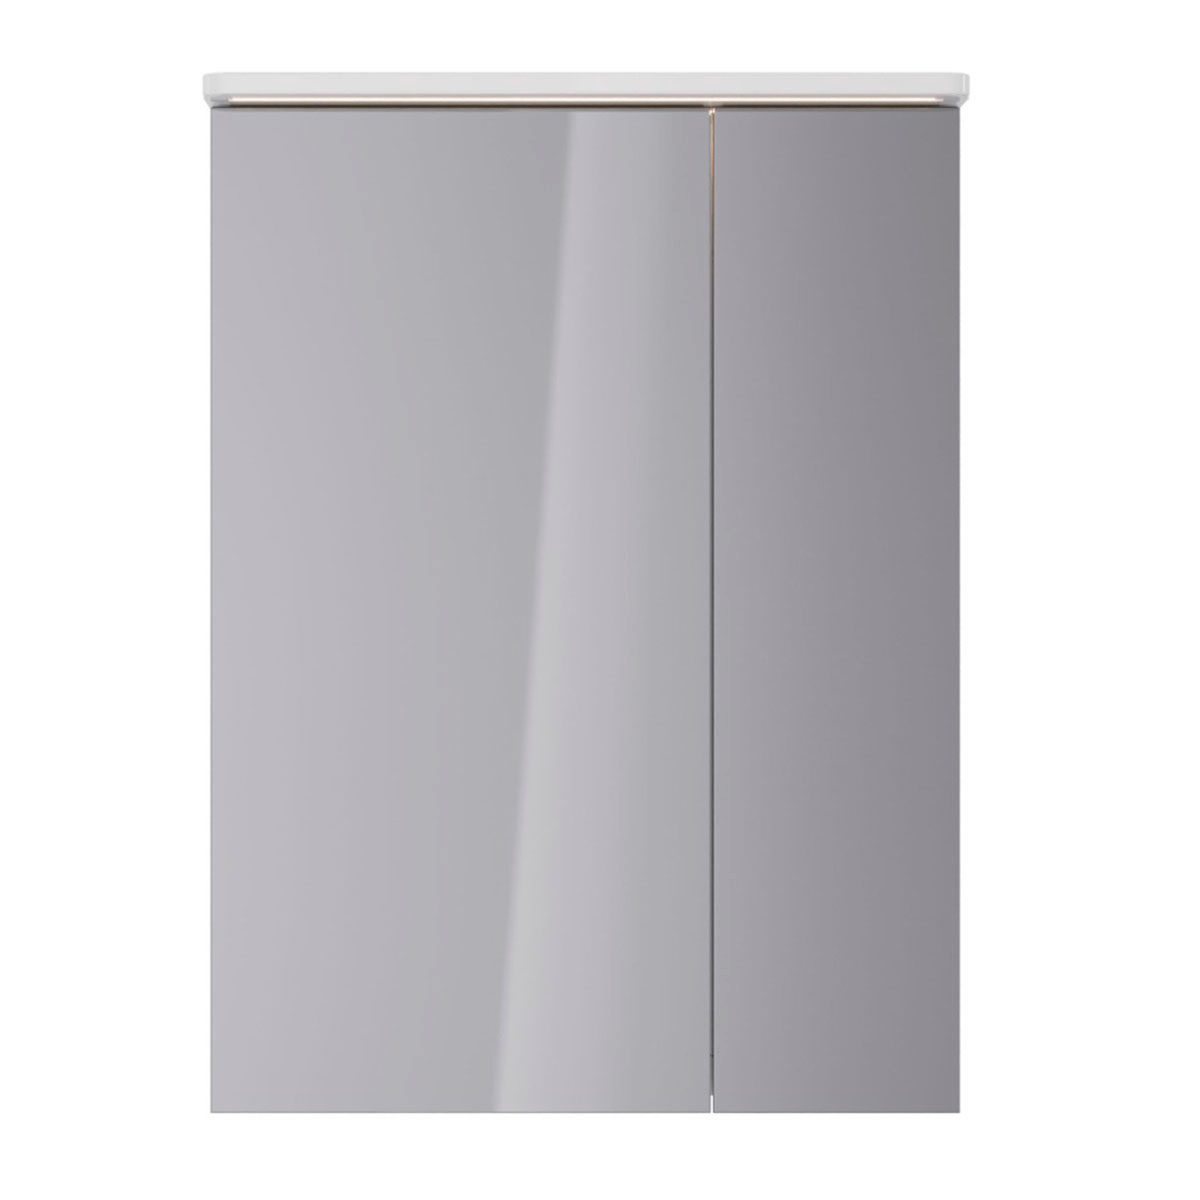 Шкаф зеркальный Lemark ZENON 60х80 см 2-х дверный с козырьком-подсветкой, с розеткой, цвет корпуса: Белый глянец